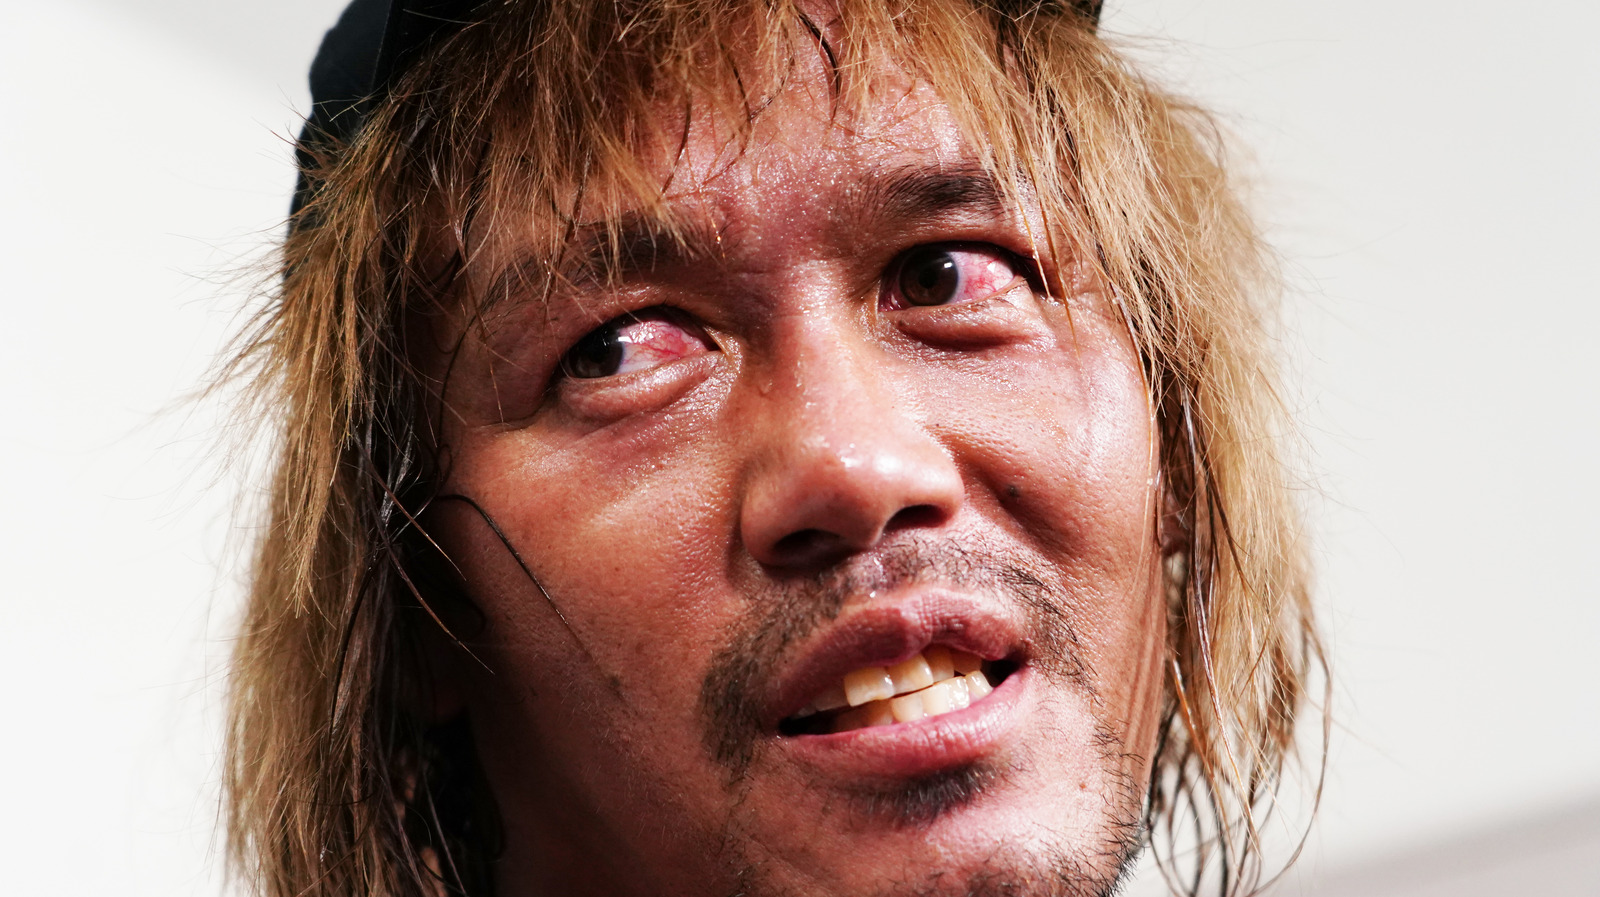 NJPW Star Tetsuya Naito Reportedly Set For Eye Surgery This Week